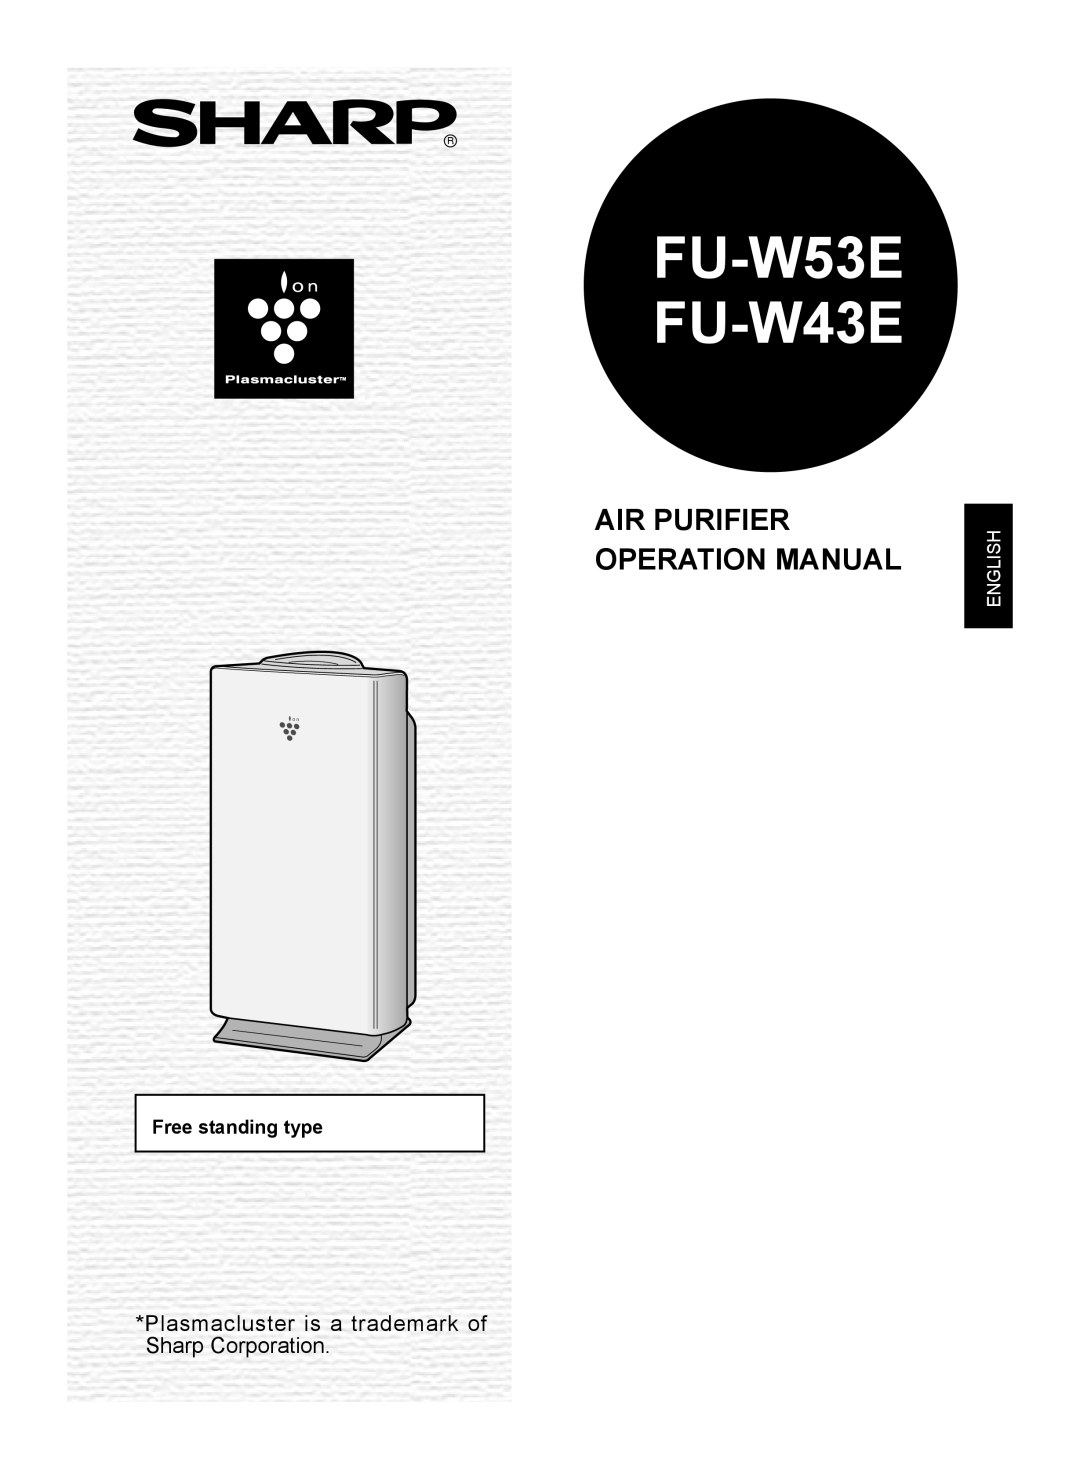 Sharp operation manual FU-W53E FU-W43E, Air Purifier, Luftreiniger, Bedienungsanleitung, Purificateur Dair, Français 